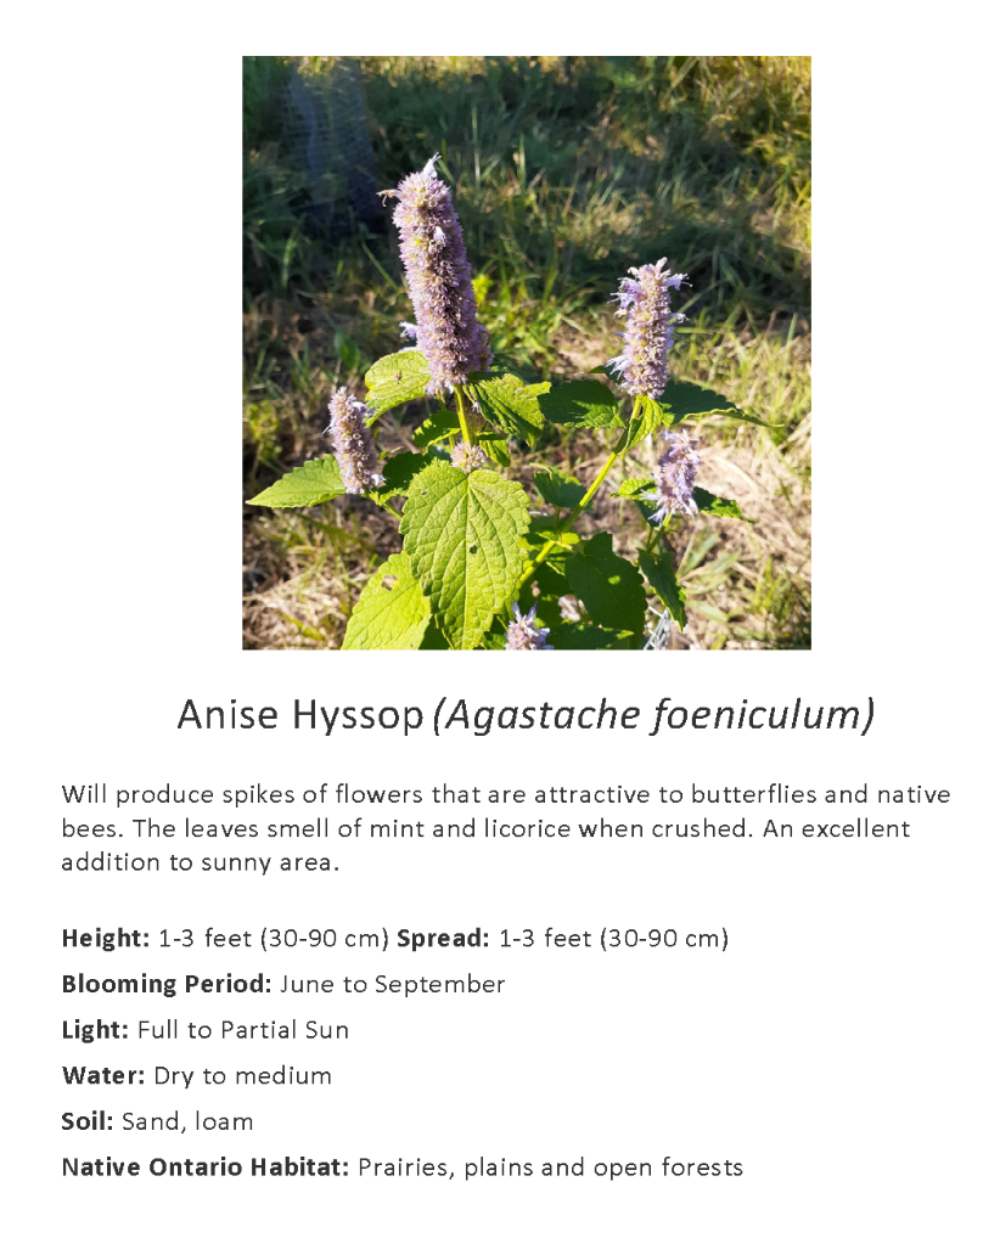 Ontario Native Anise Hyssop seeds